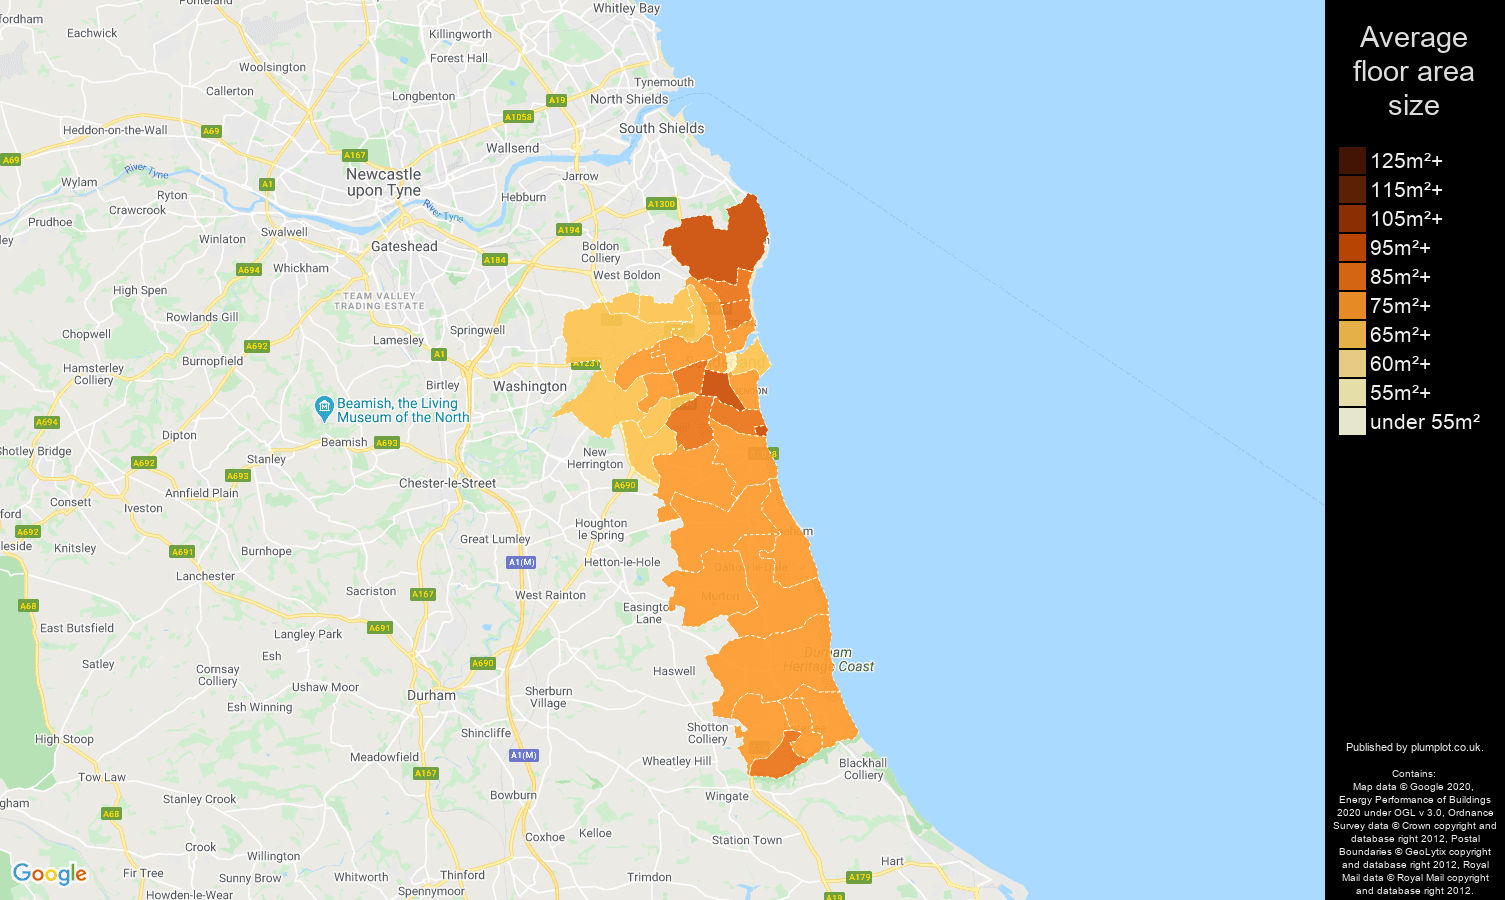 Sunderland map of average floor area size of properties